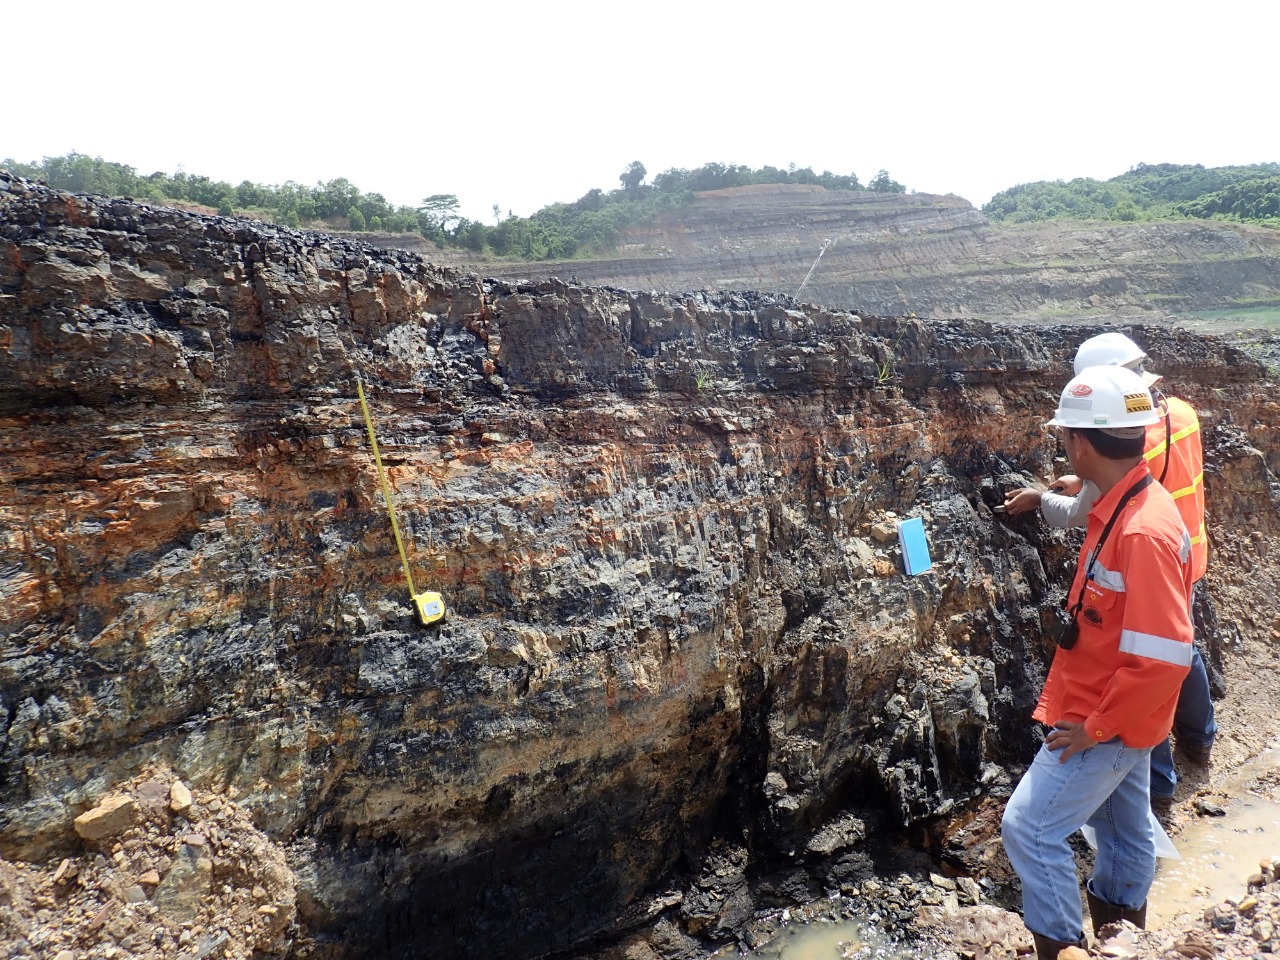 Data collection process and example of rocks in Senakin (photo by F. Anggara)